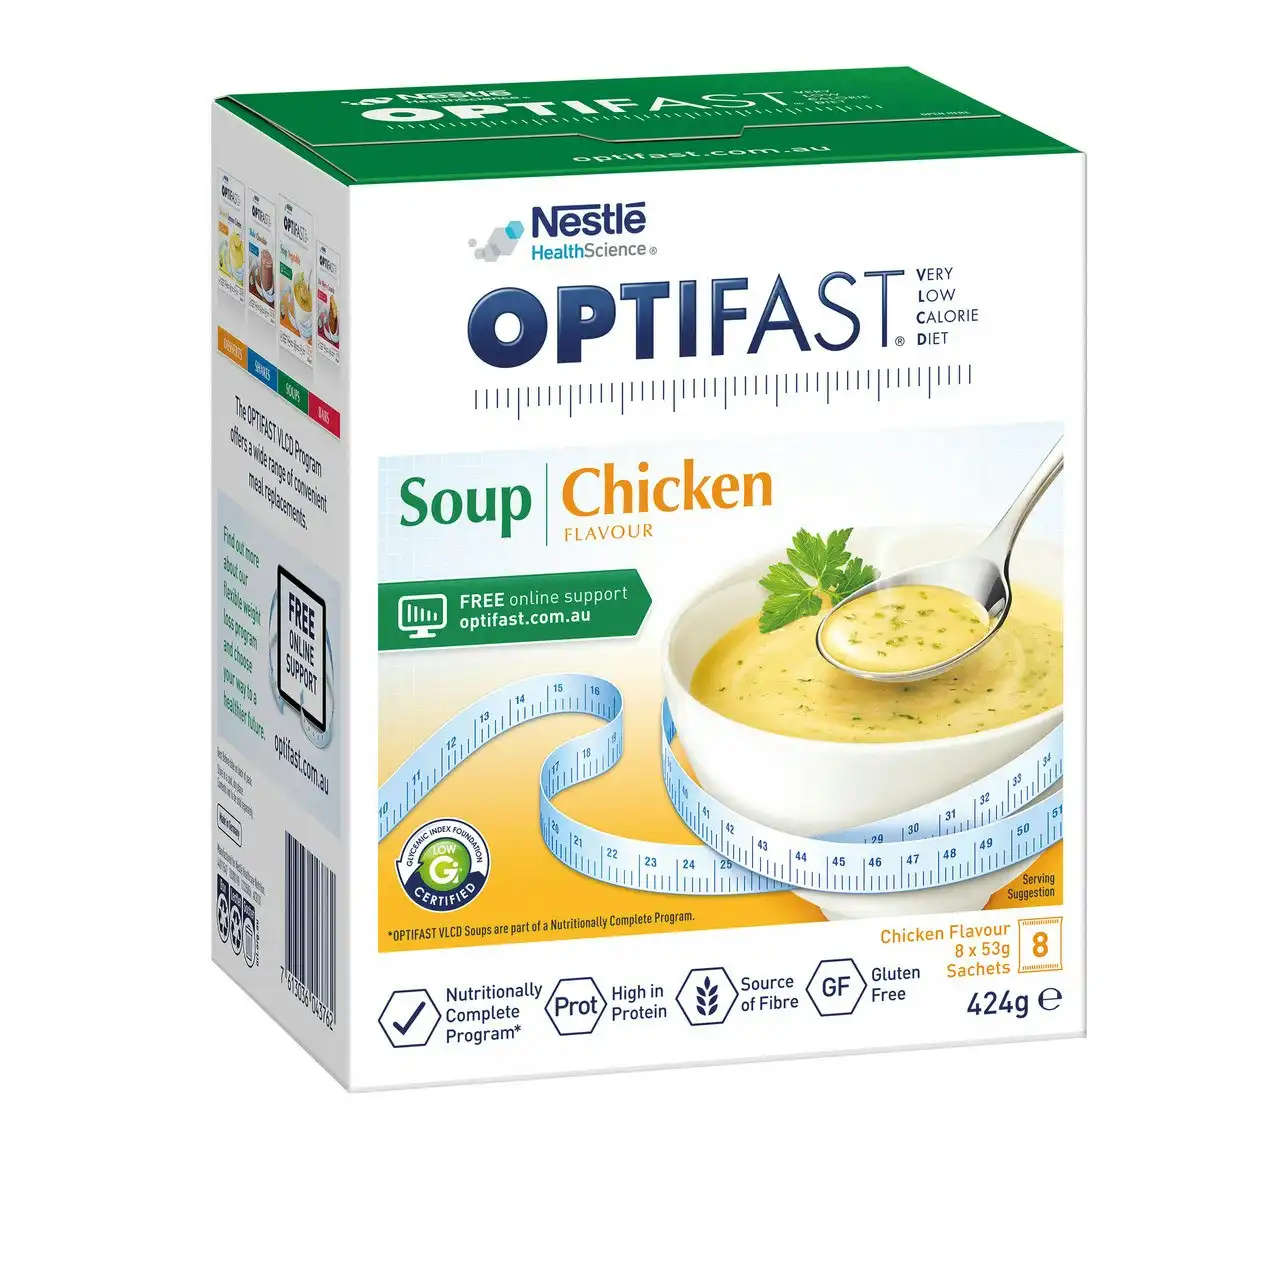 OPTIFAST VLCD Soup Chicken